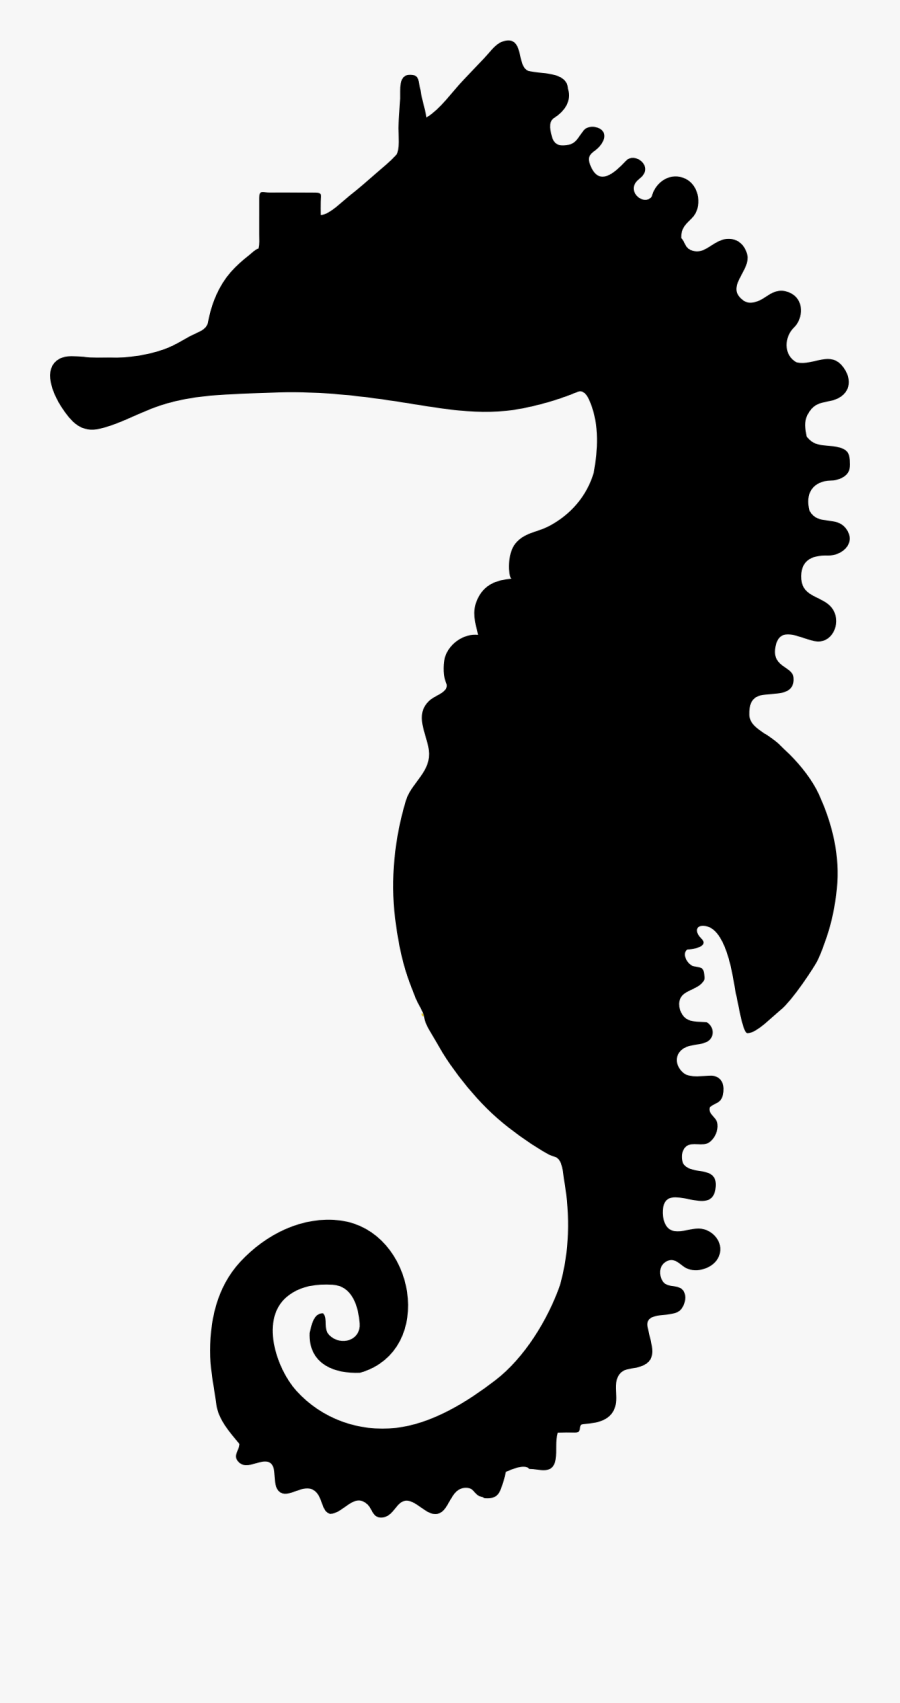 Seahorse Silhouette - Sea Horse Silhouette Png, Transparent Clipart